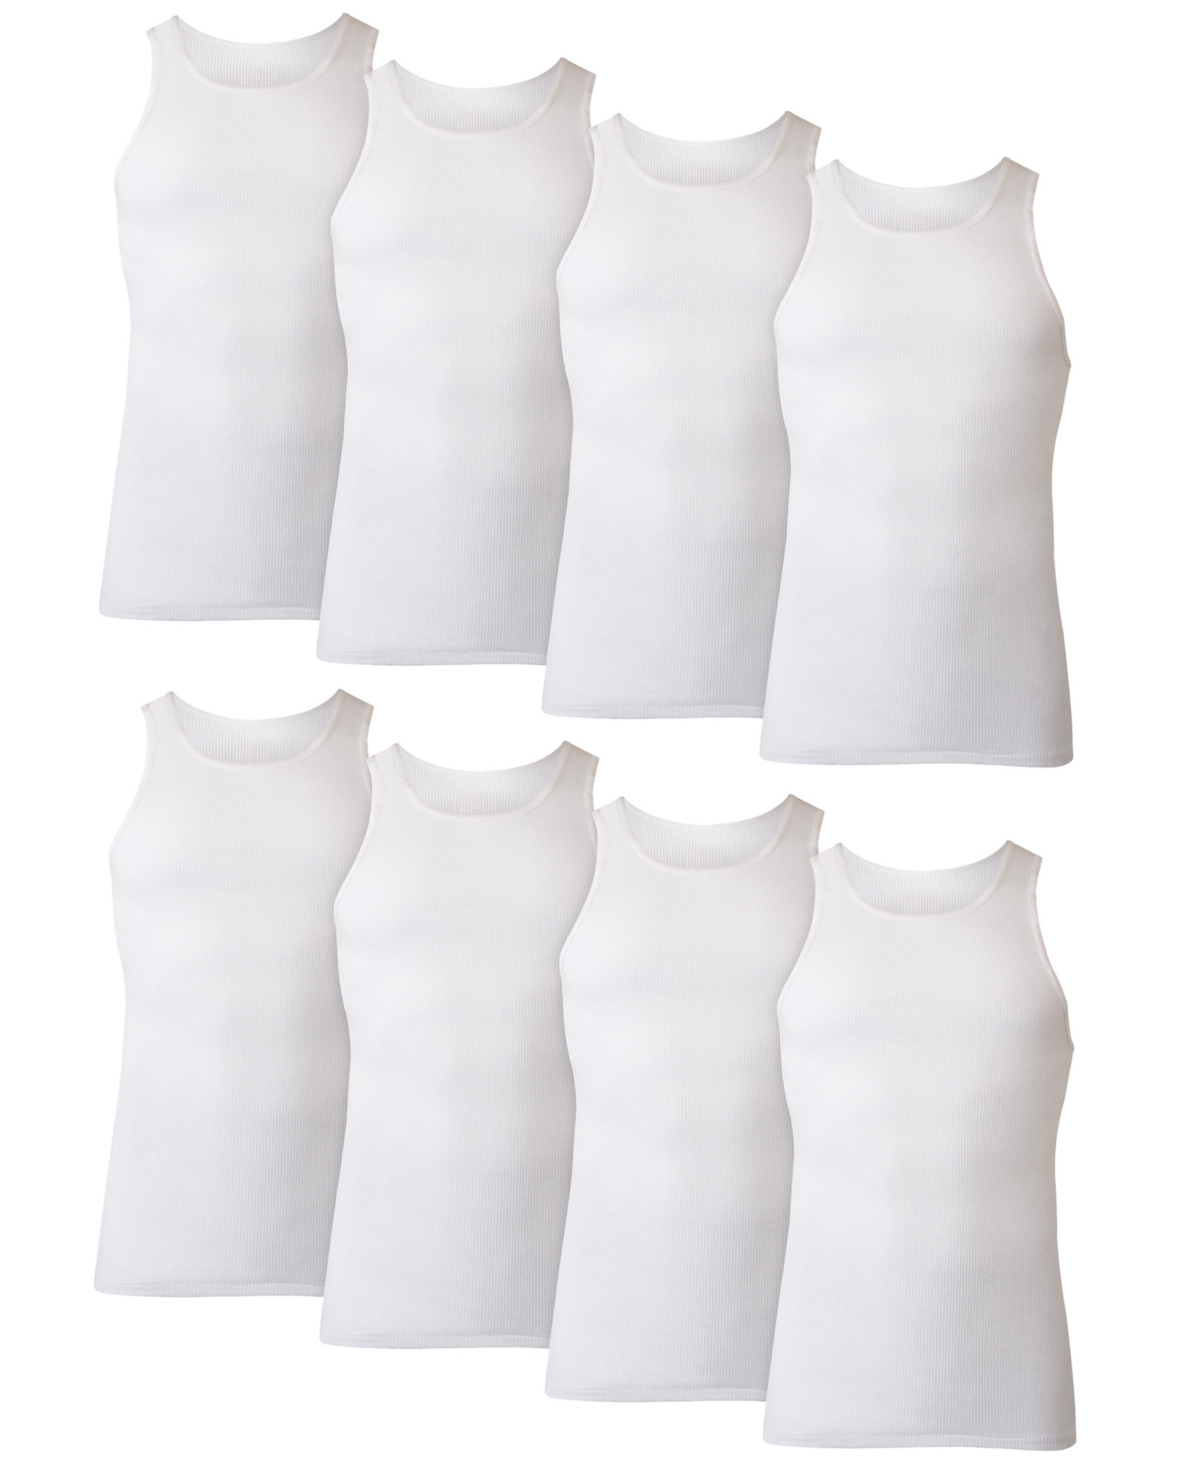 Men's Cotton ComfortSoft Tank Top 7+1 Free Undershirts - Assorted